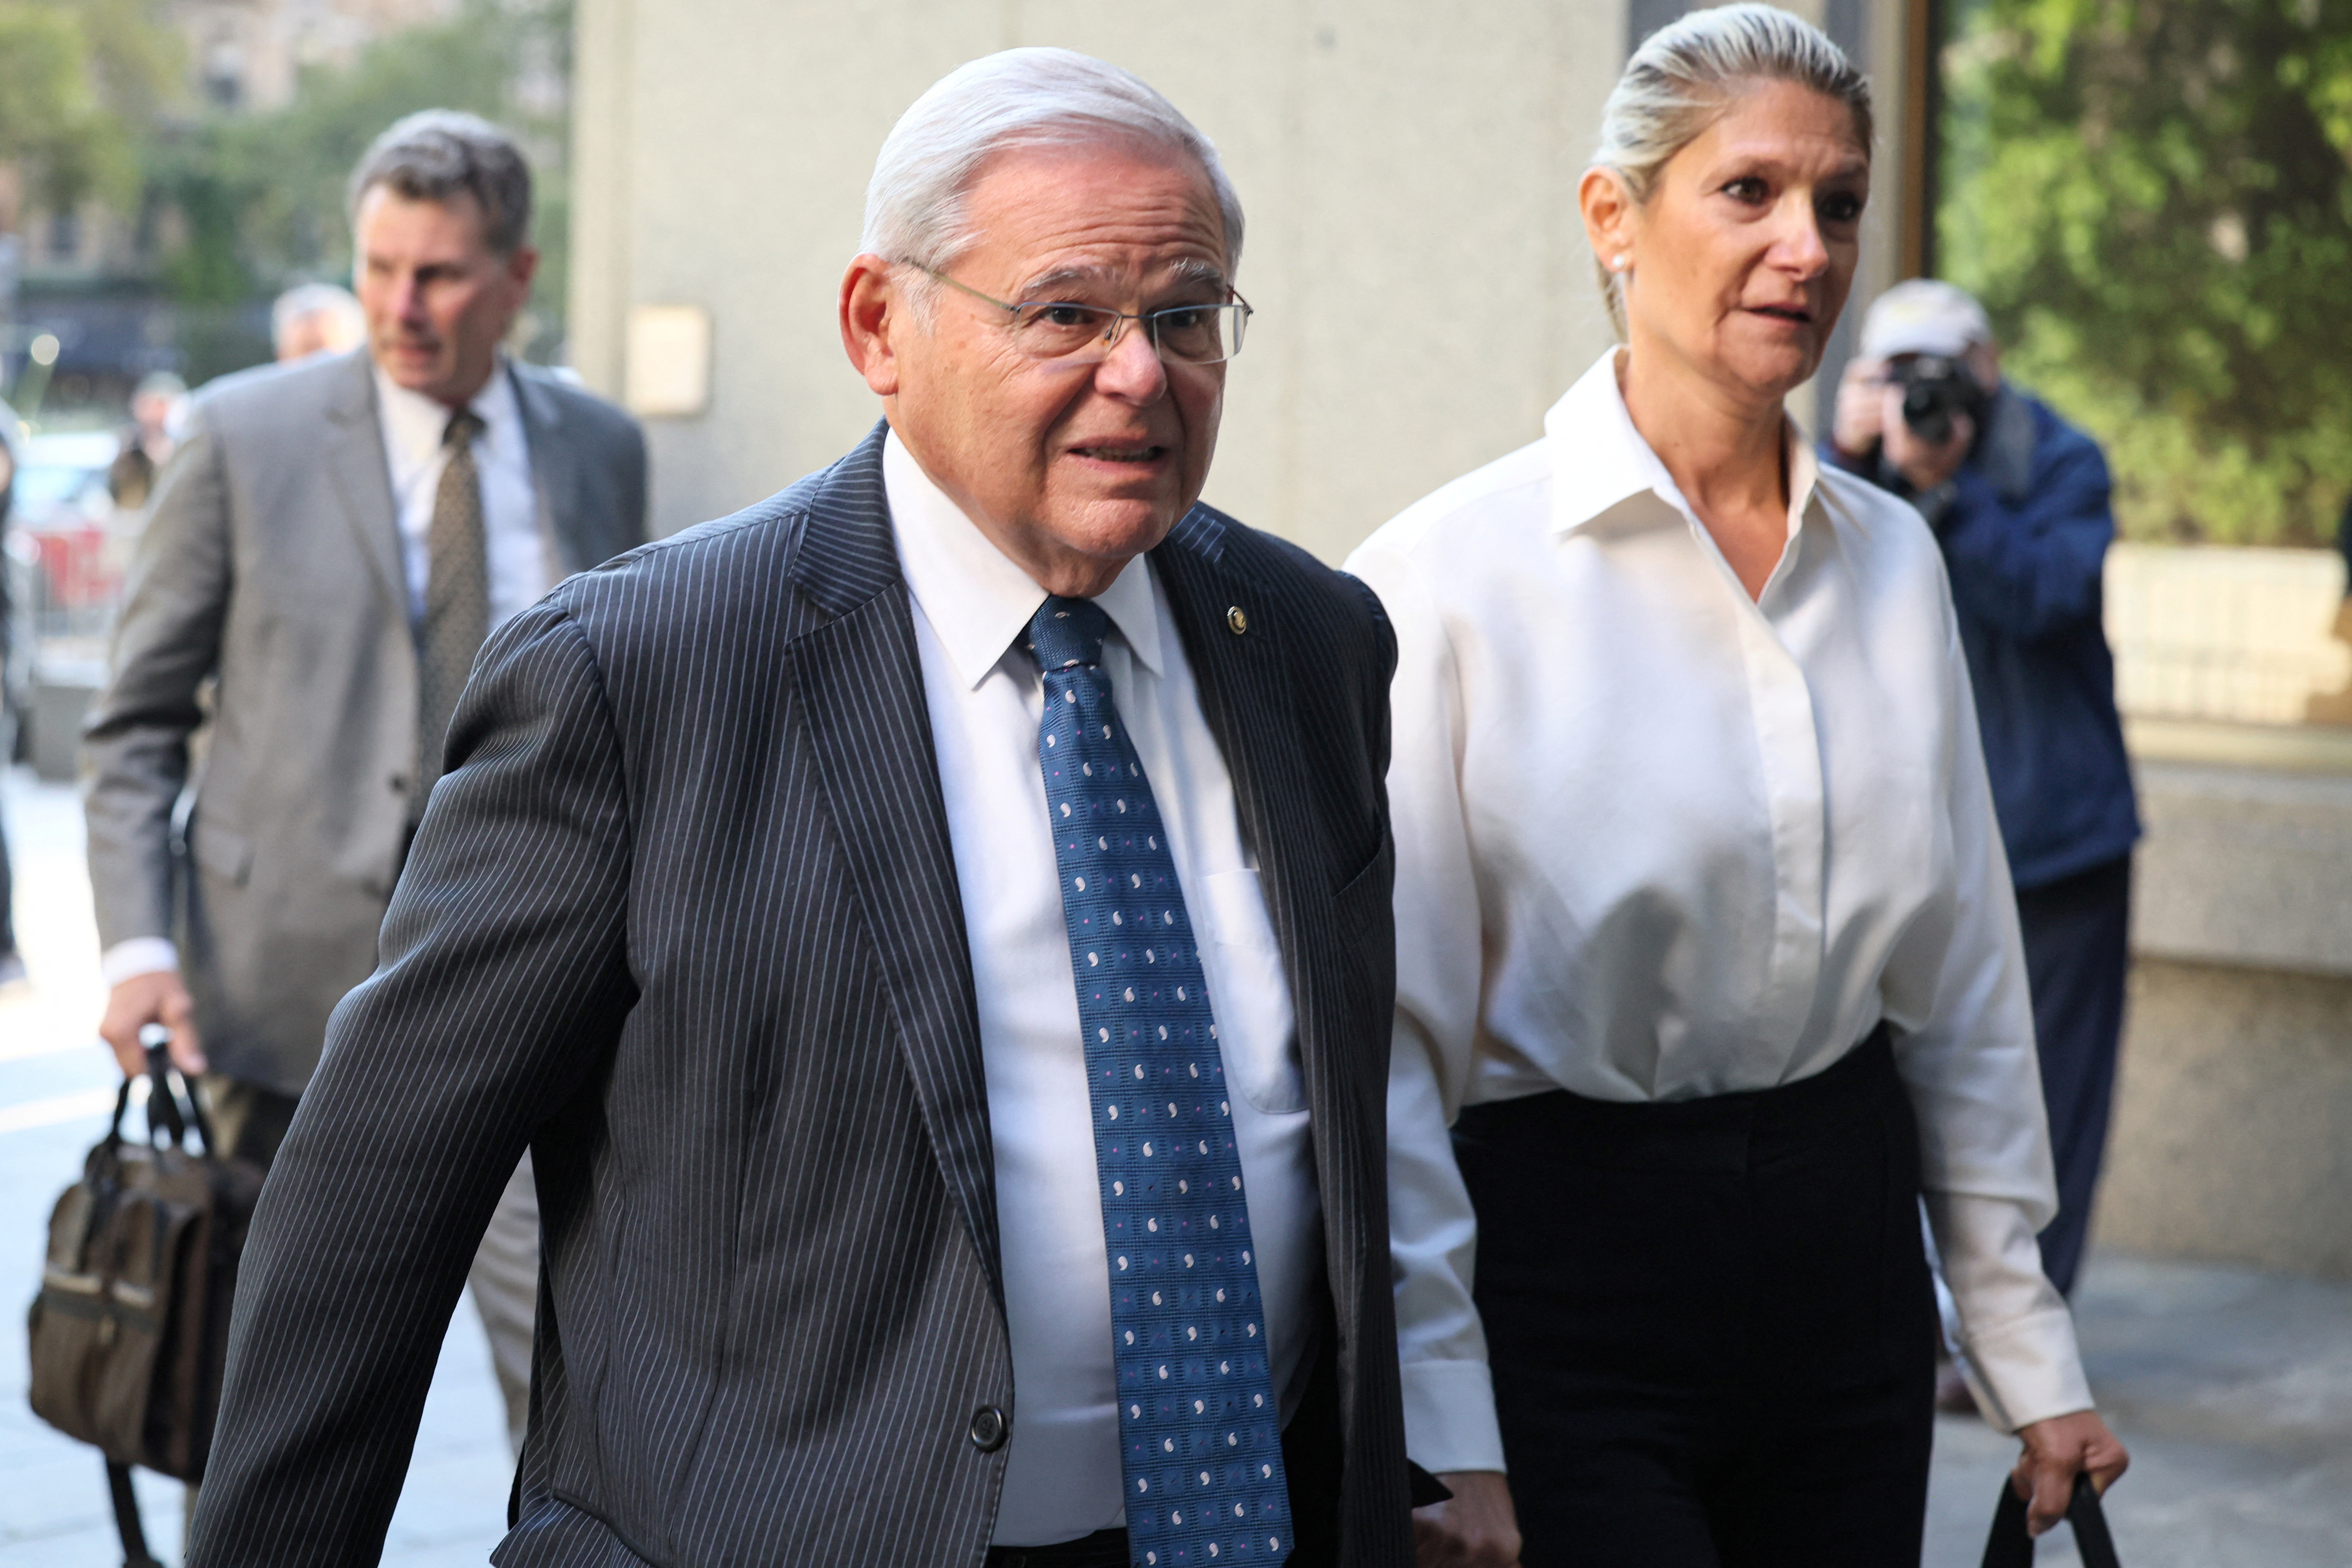 U.S. Senator Menendez and his wife Nadine arrive at Federal Court in New York